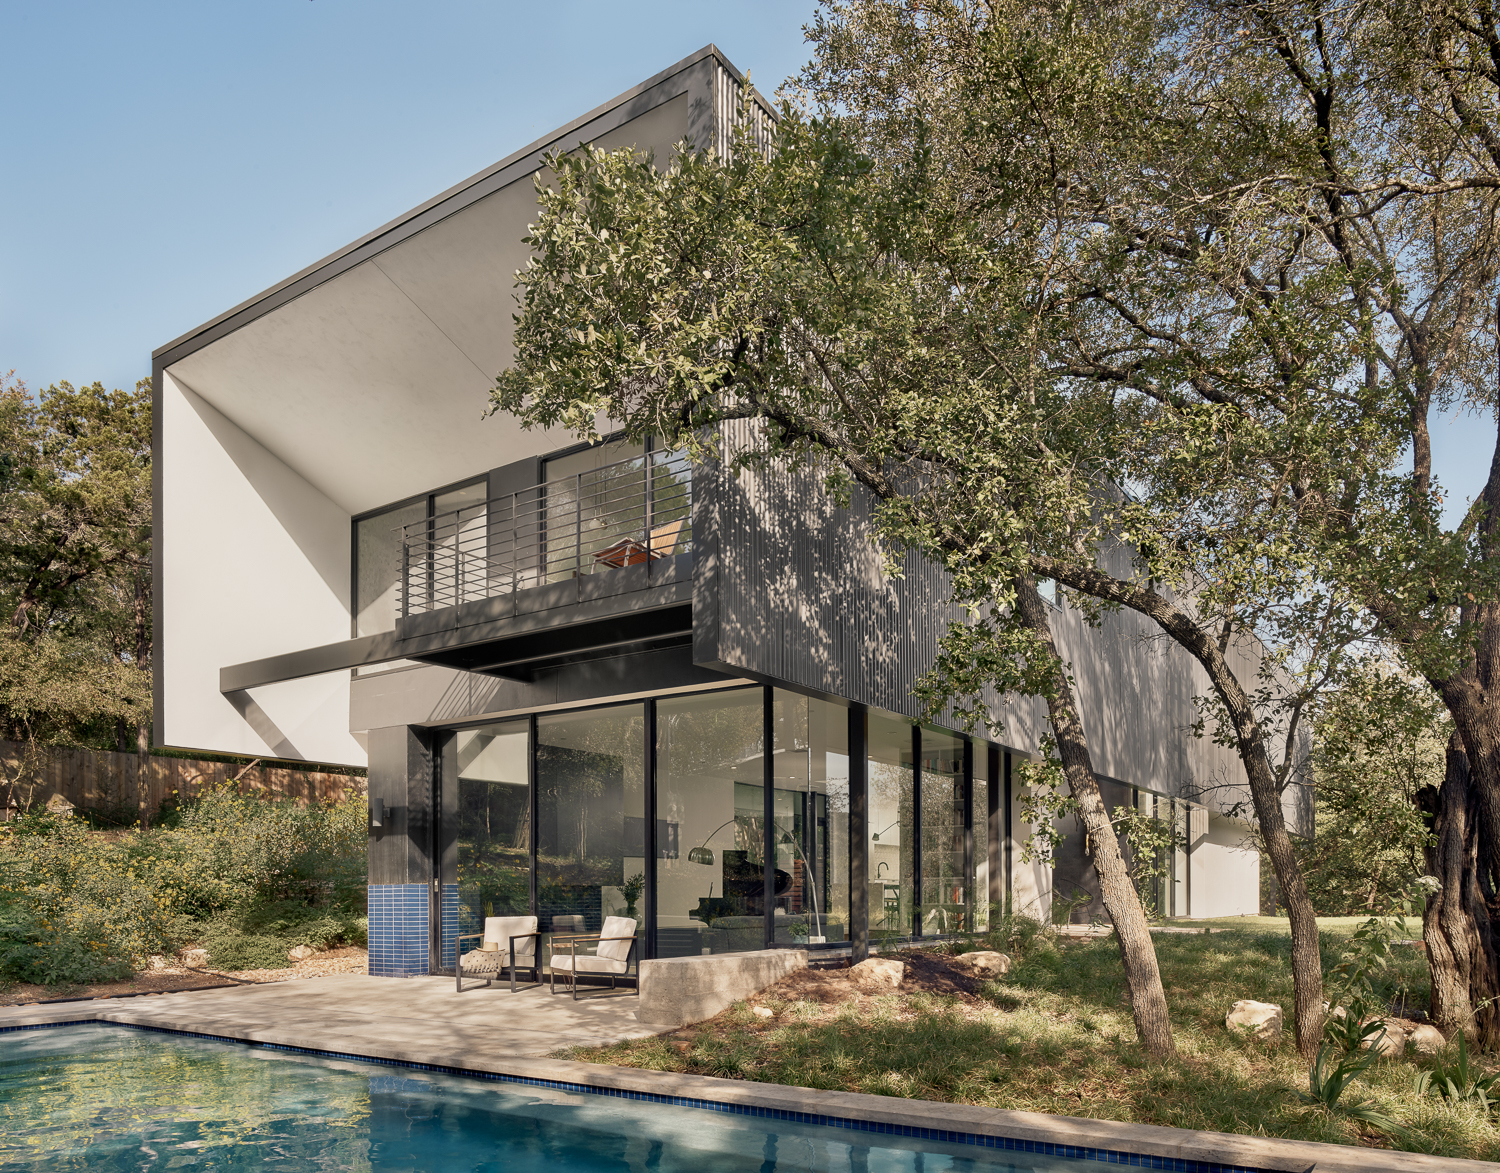 Modern cubic home designed by Alterstudio in Austin